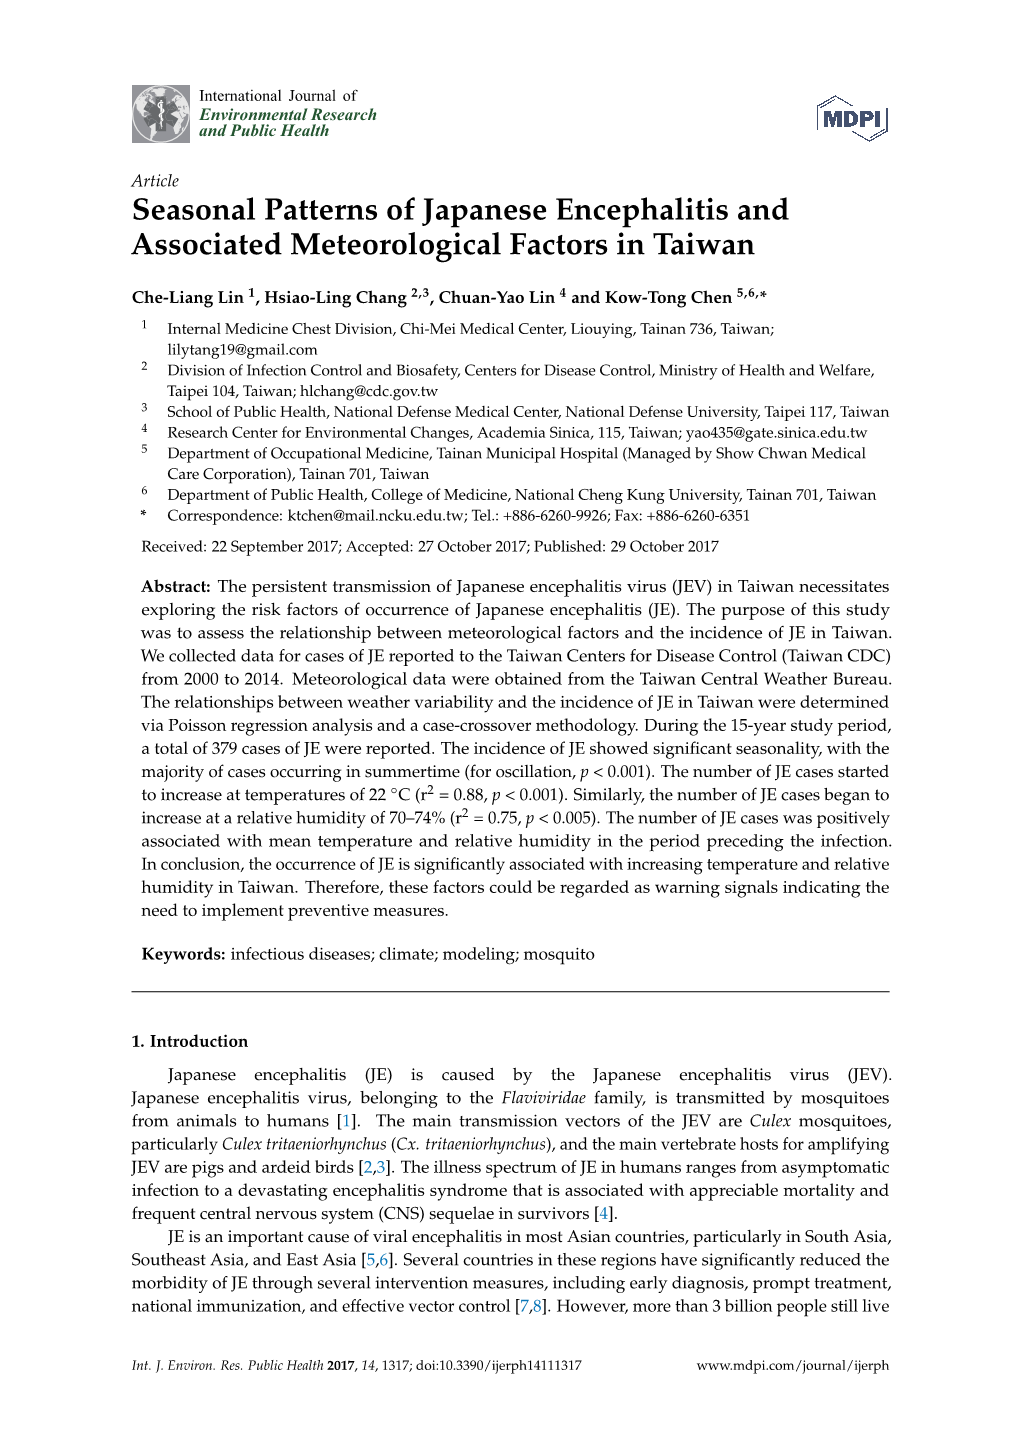 Seasonal Patterns of Japanese Encephalitis and Associated Meteorological Factors in Taiwan